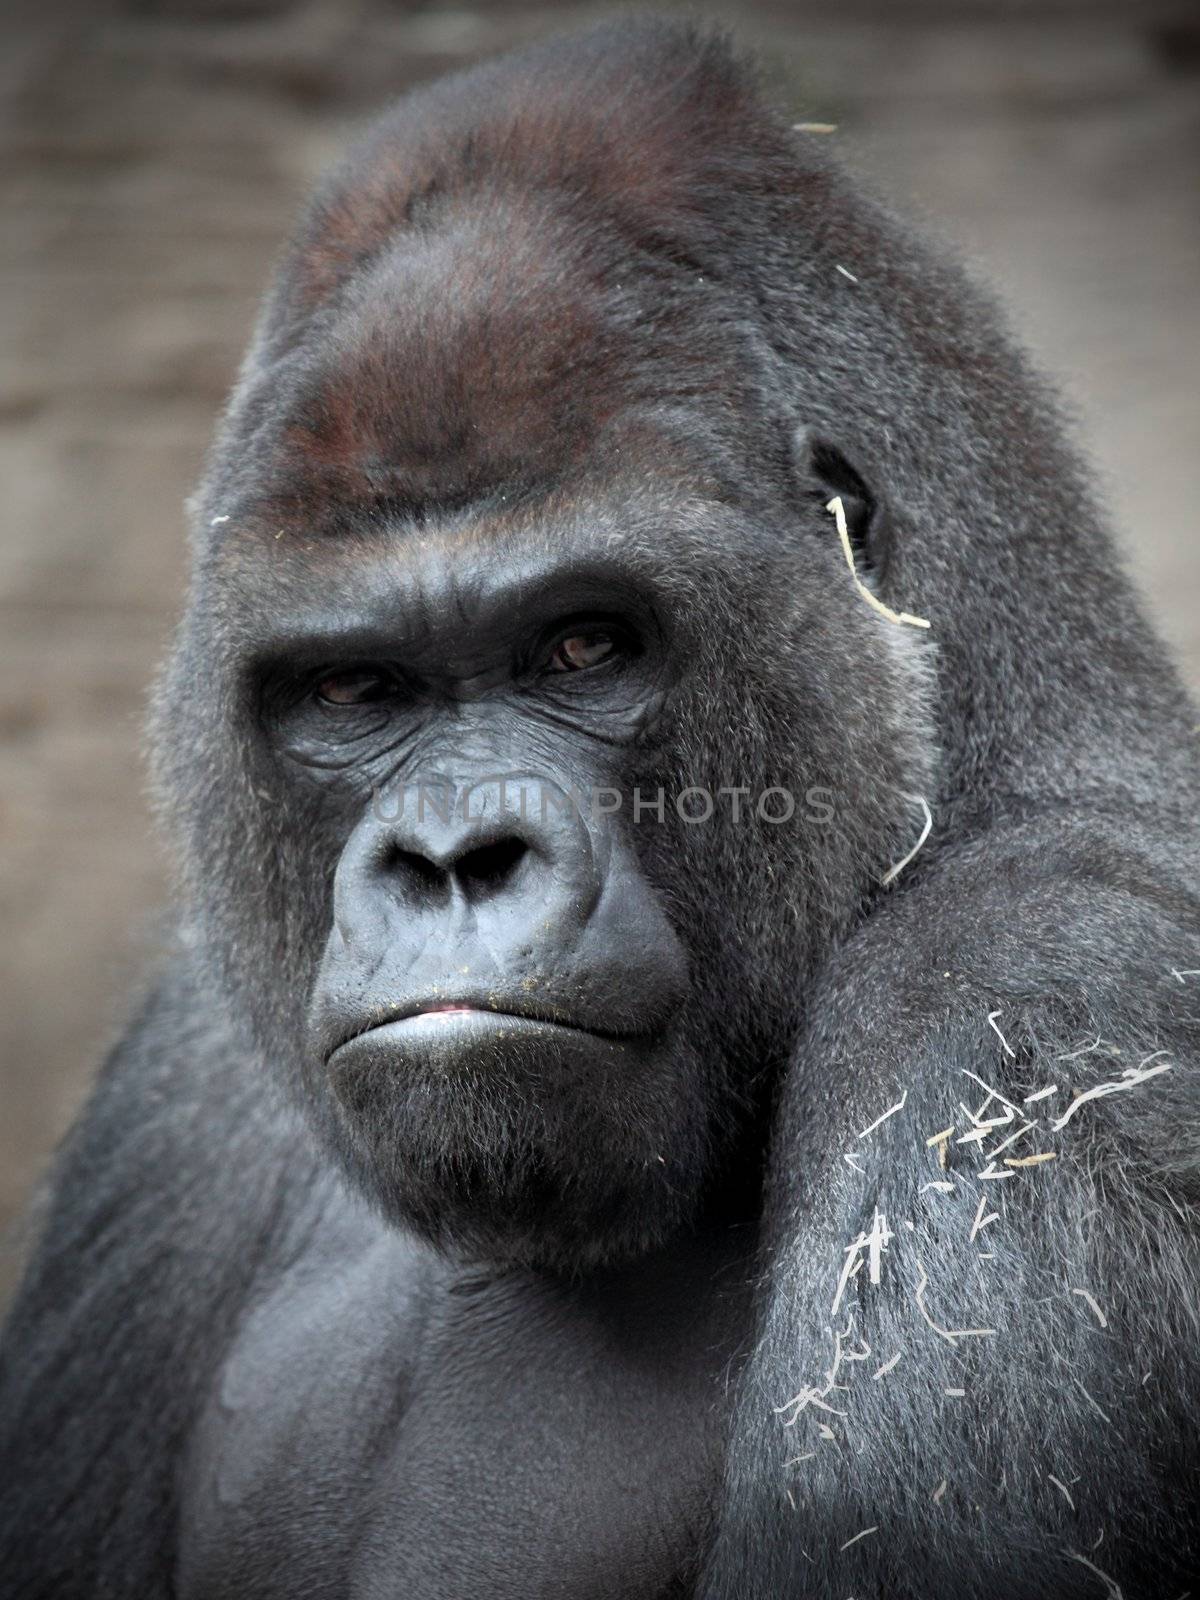 Picture of a silver back gorilla